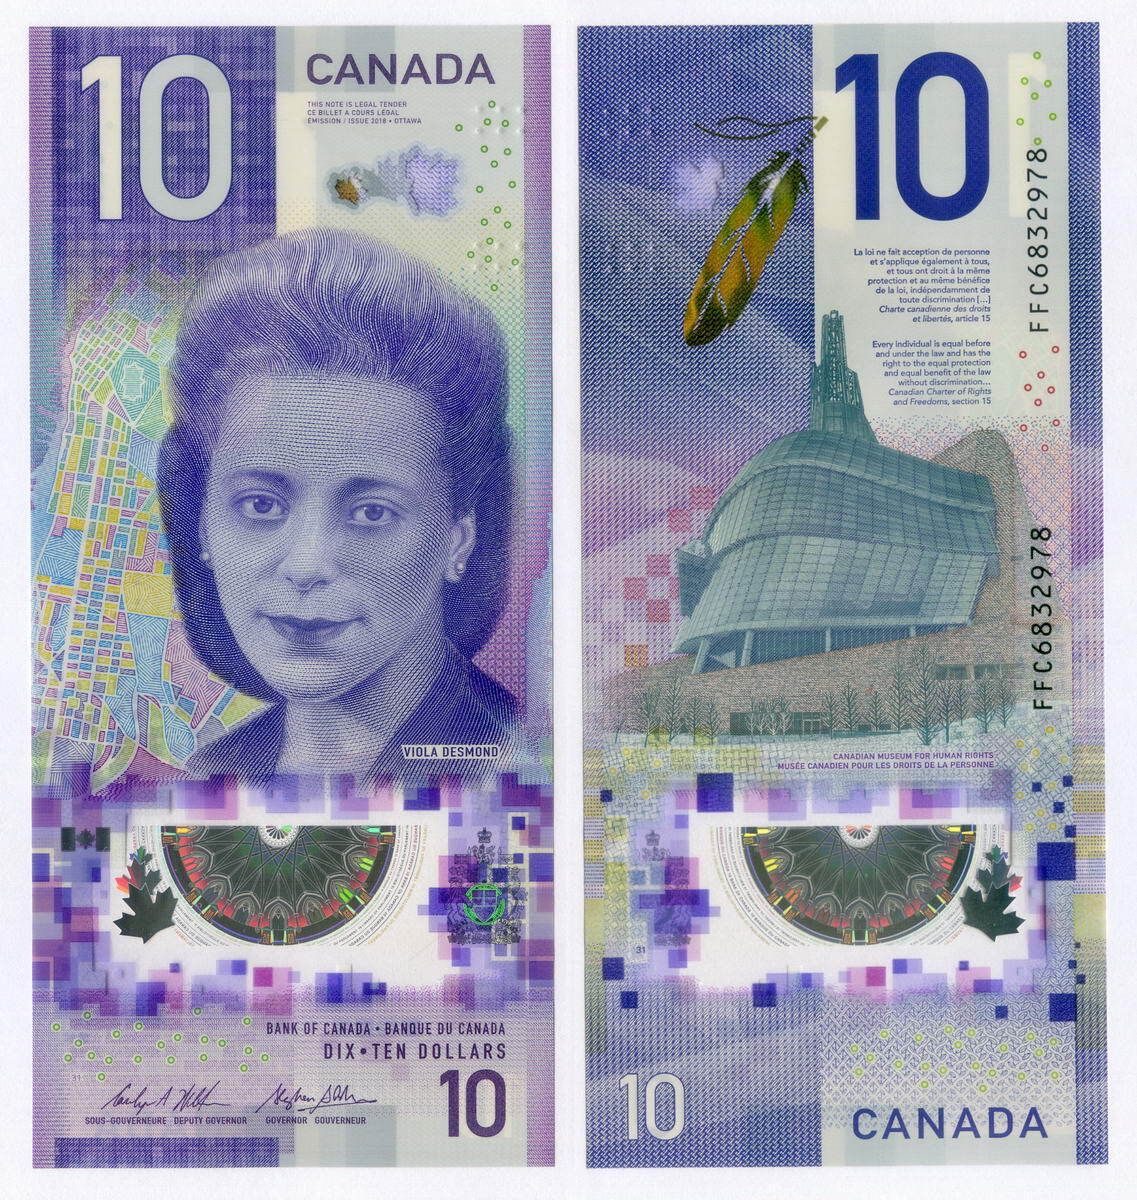 Купюра 2018. Банкноты Канады. Канадский доллар 2018 года. Прозрачная купюра 2018. Доллар 2018 фото.